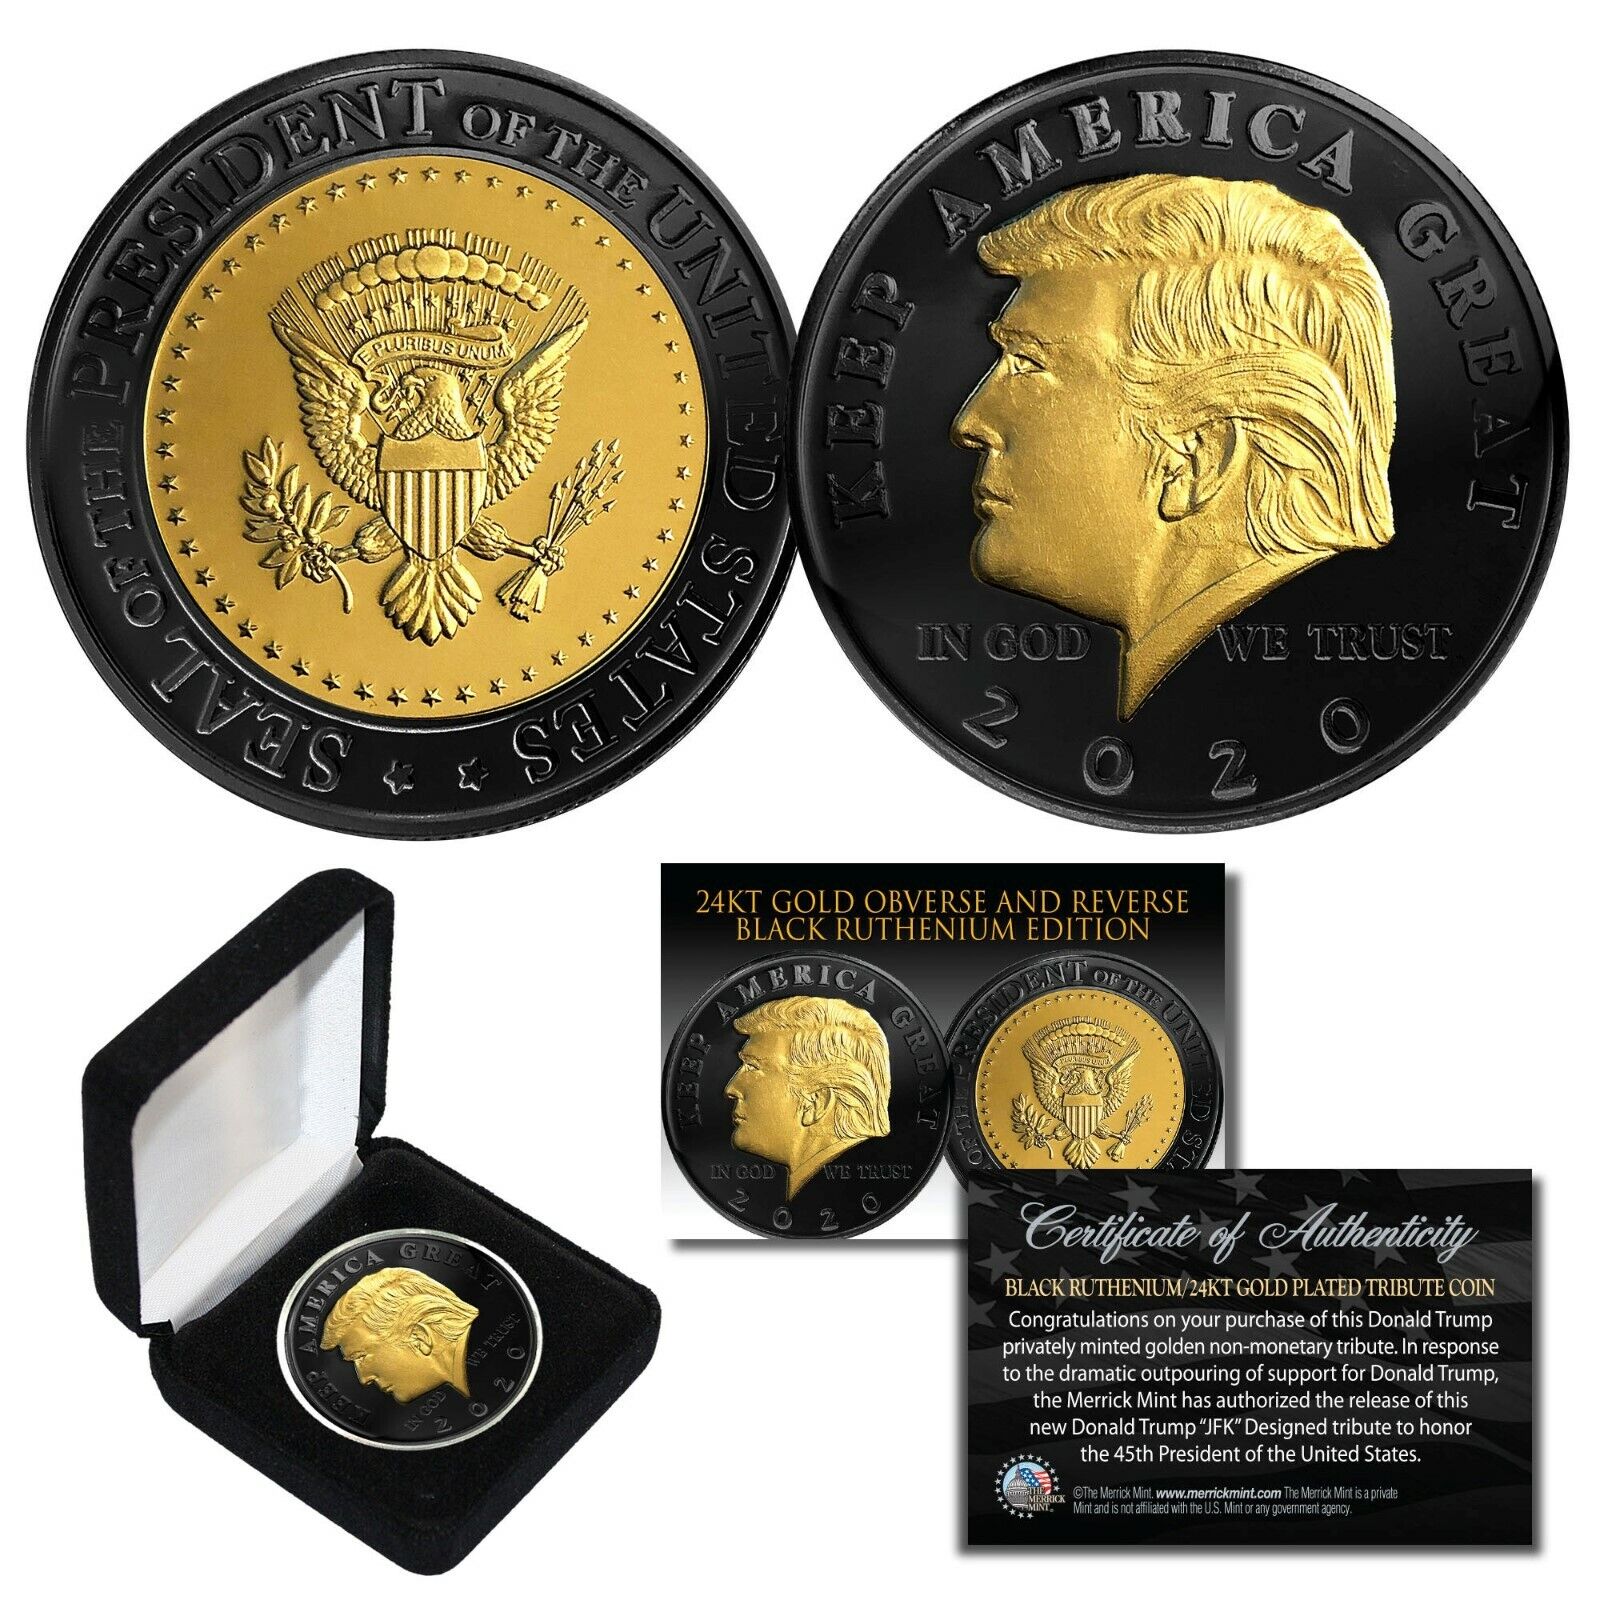 DONALD TRUMP 2020 Keep America Great BLACK RUTHENIUM 24K GOLD Medallion Coin BOX